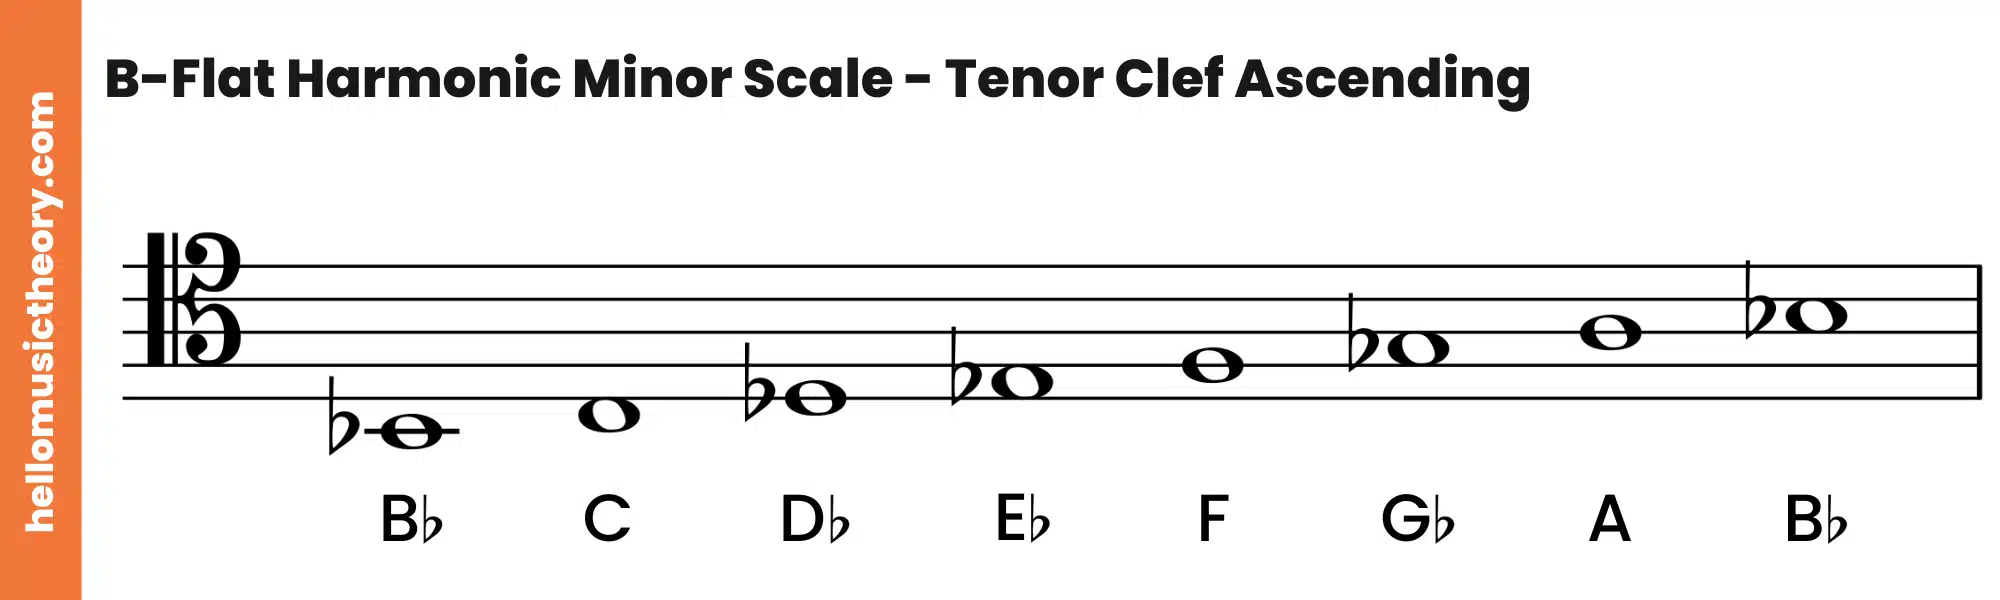 B-Flat Harmonic Minor Scale Tenor Clef Ascending